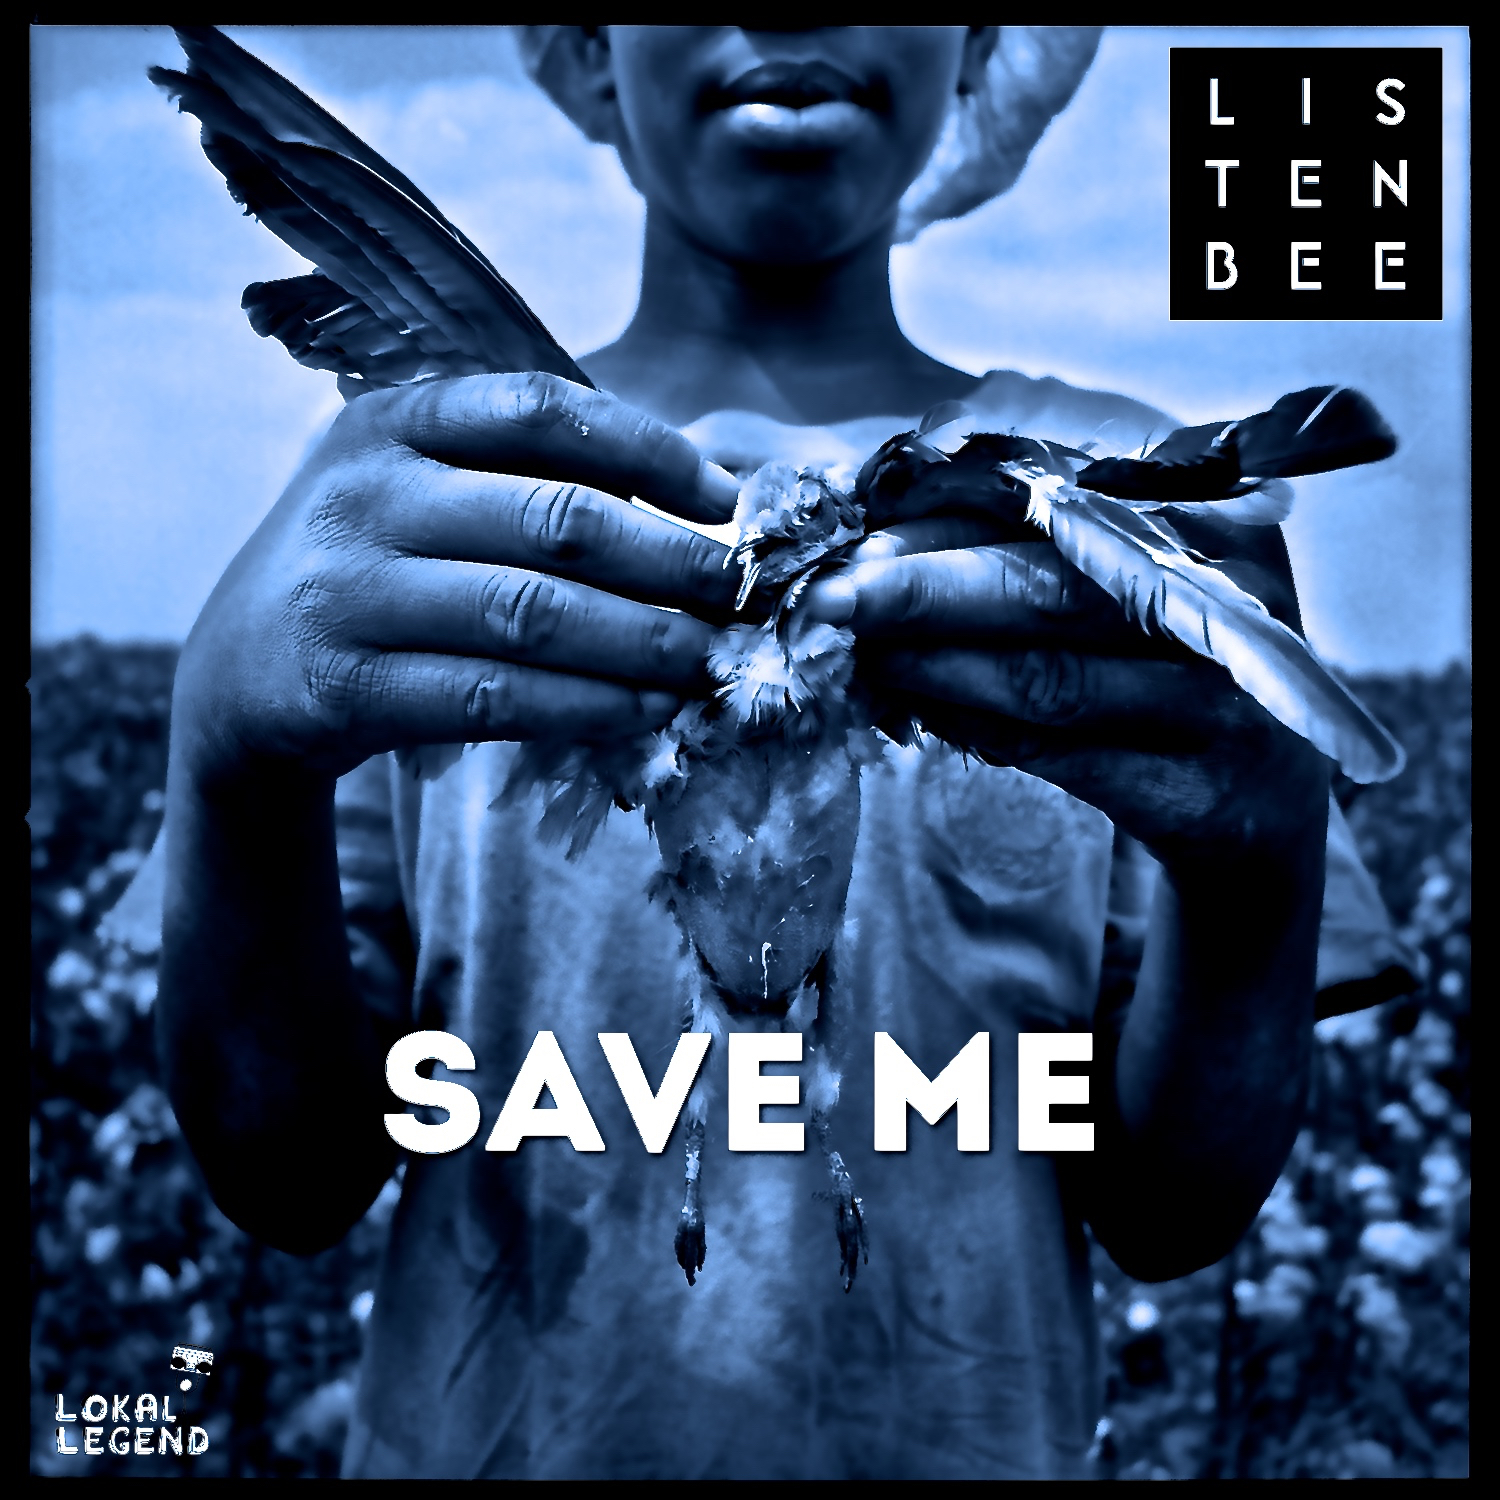 Listenbee - Save Me- remix art 2